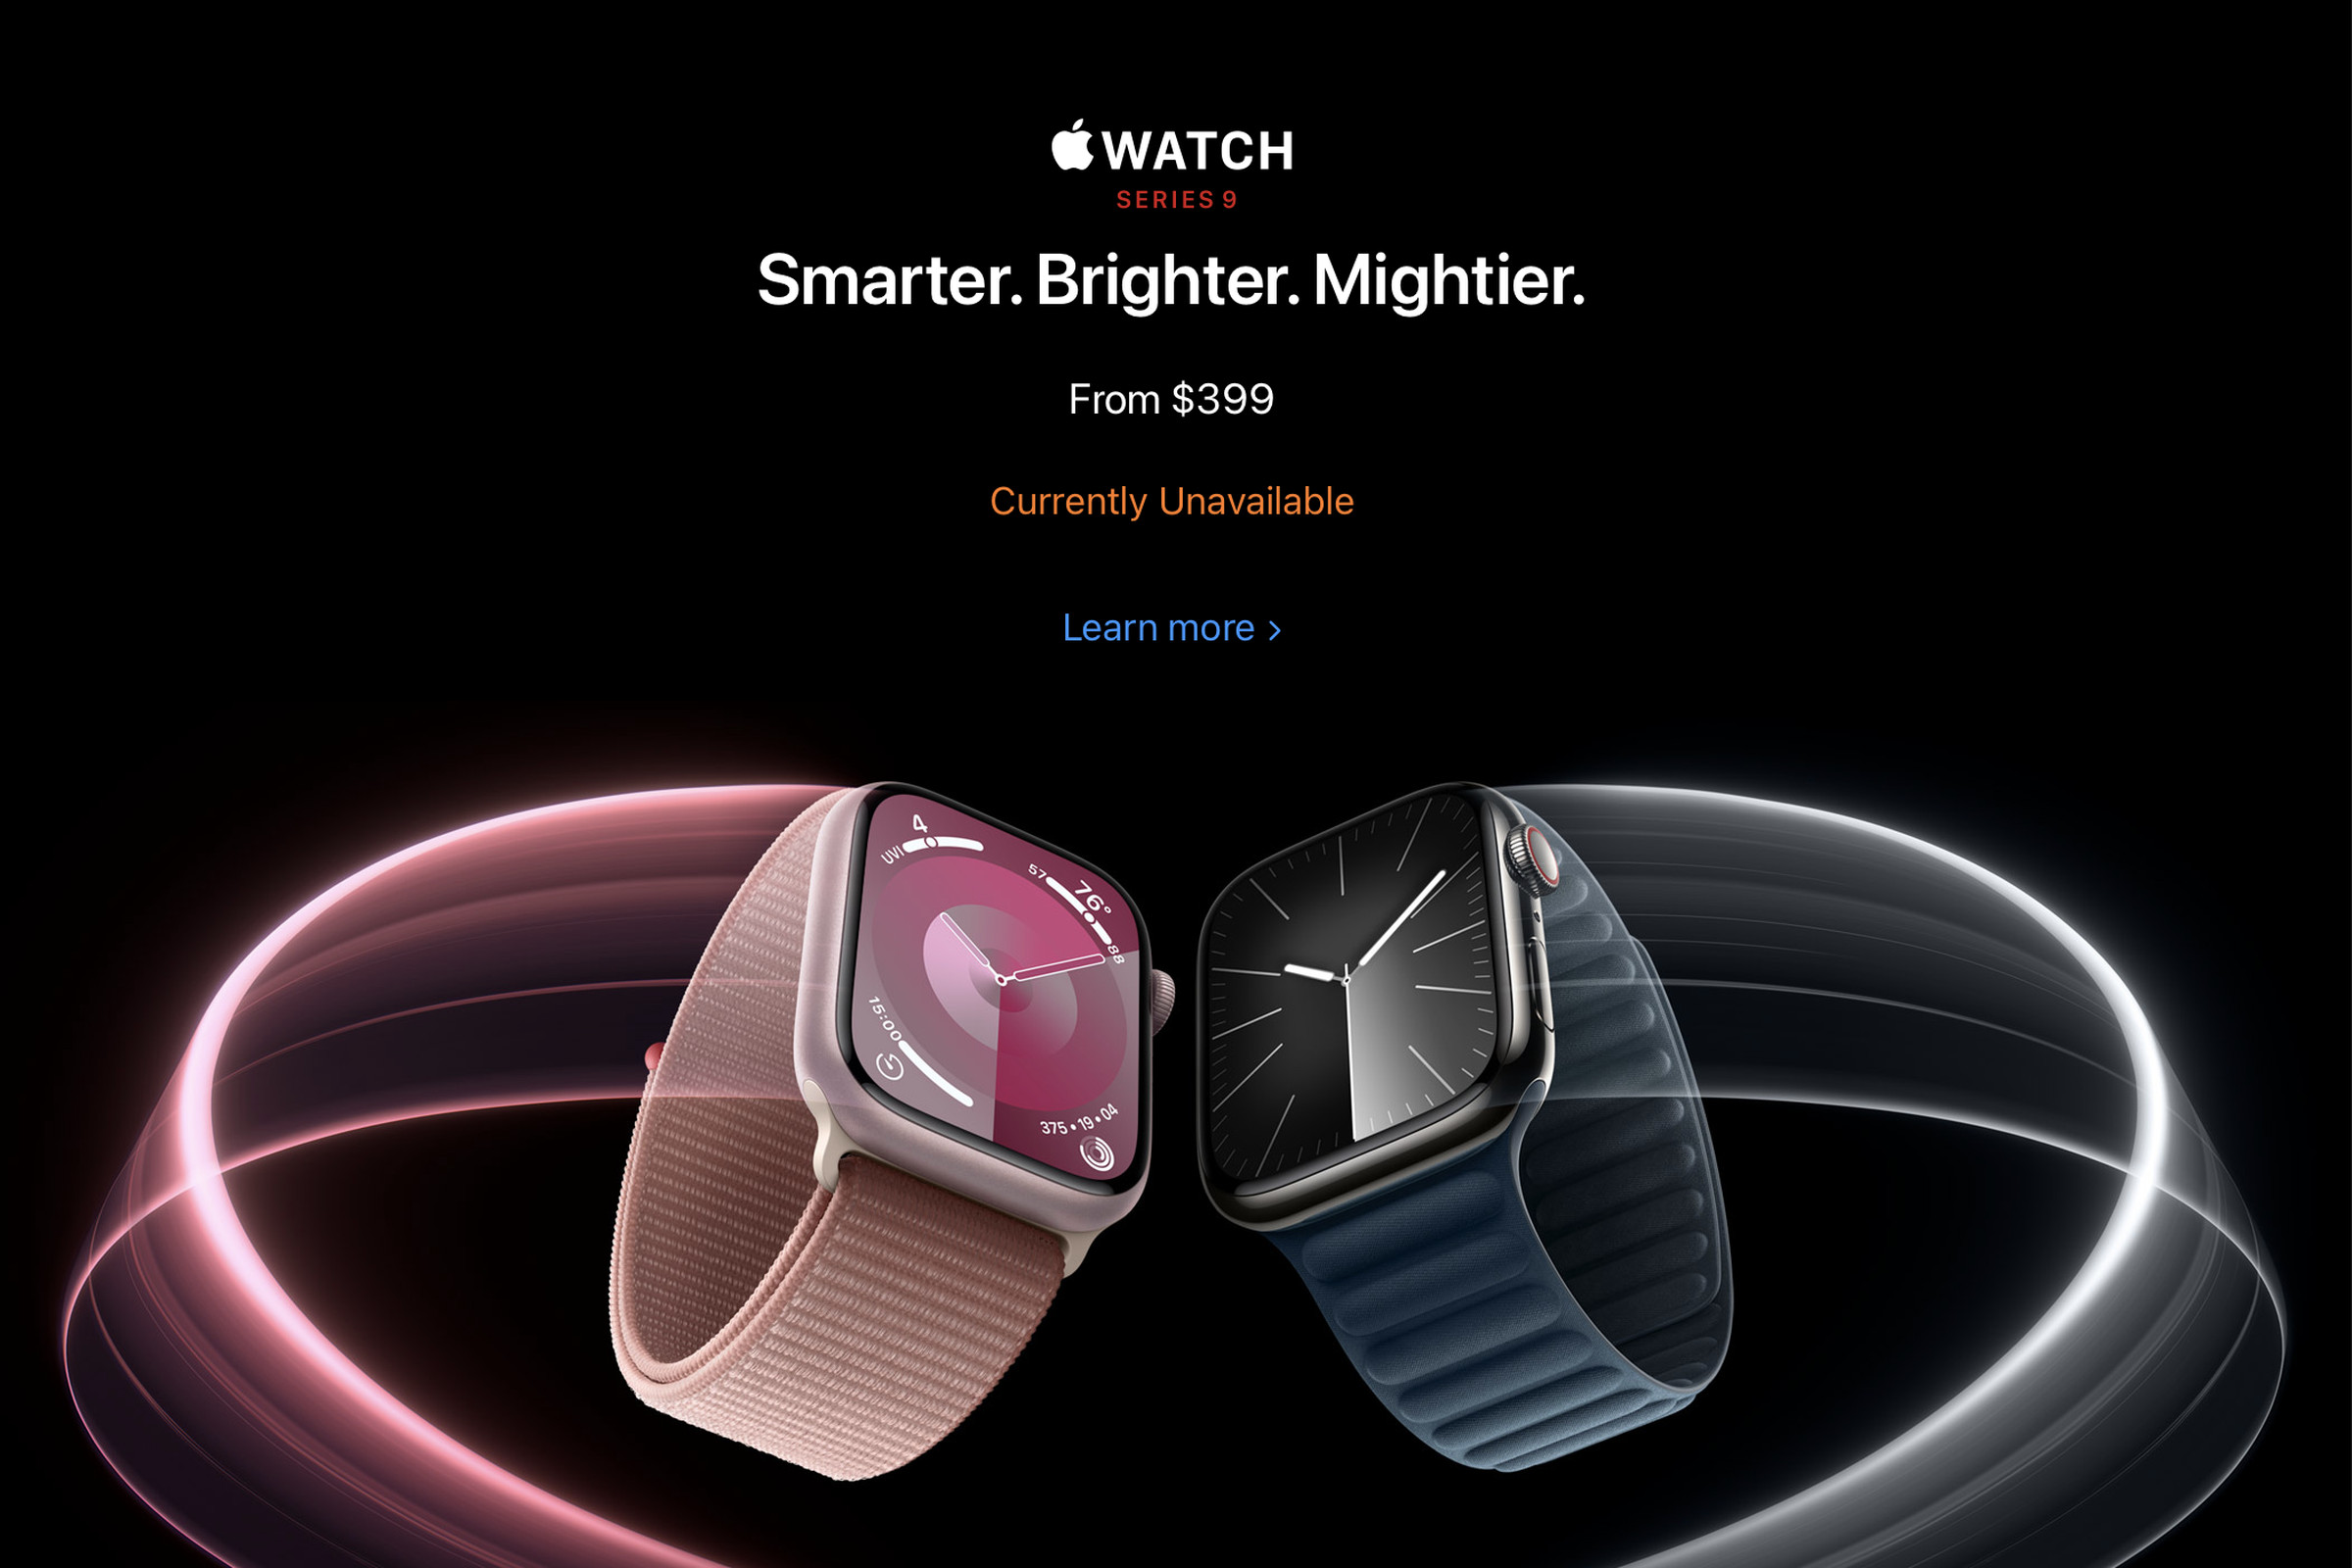 Explore Apple Watch Ultra 2 - Apple